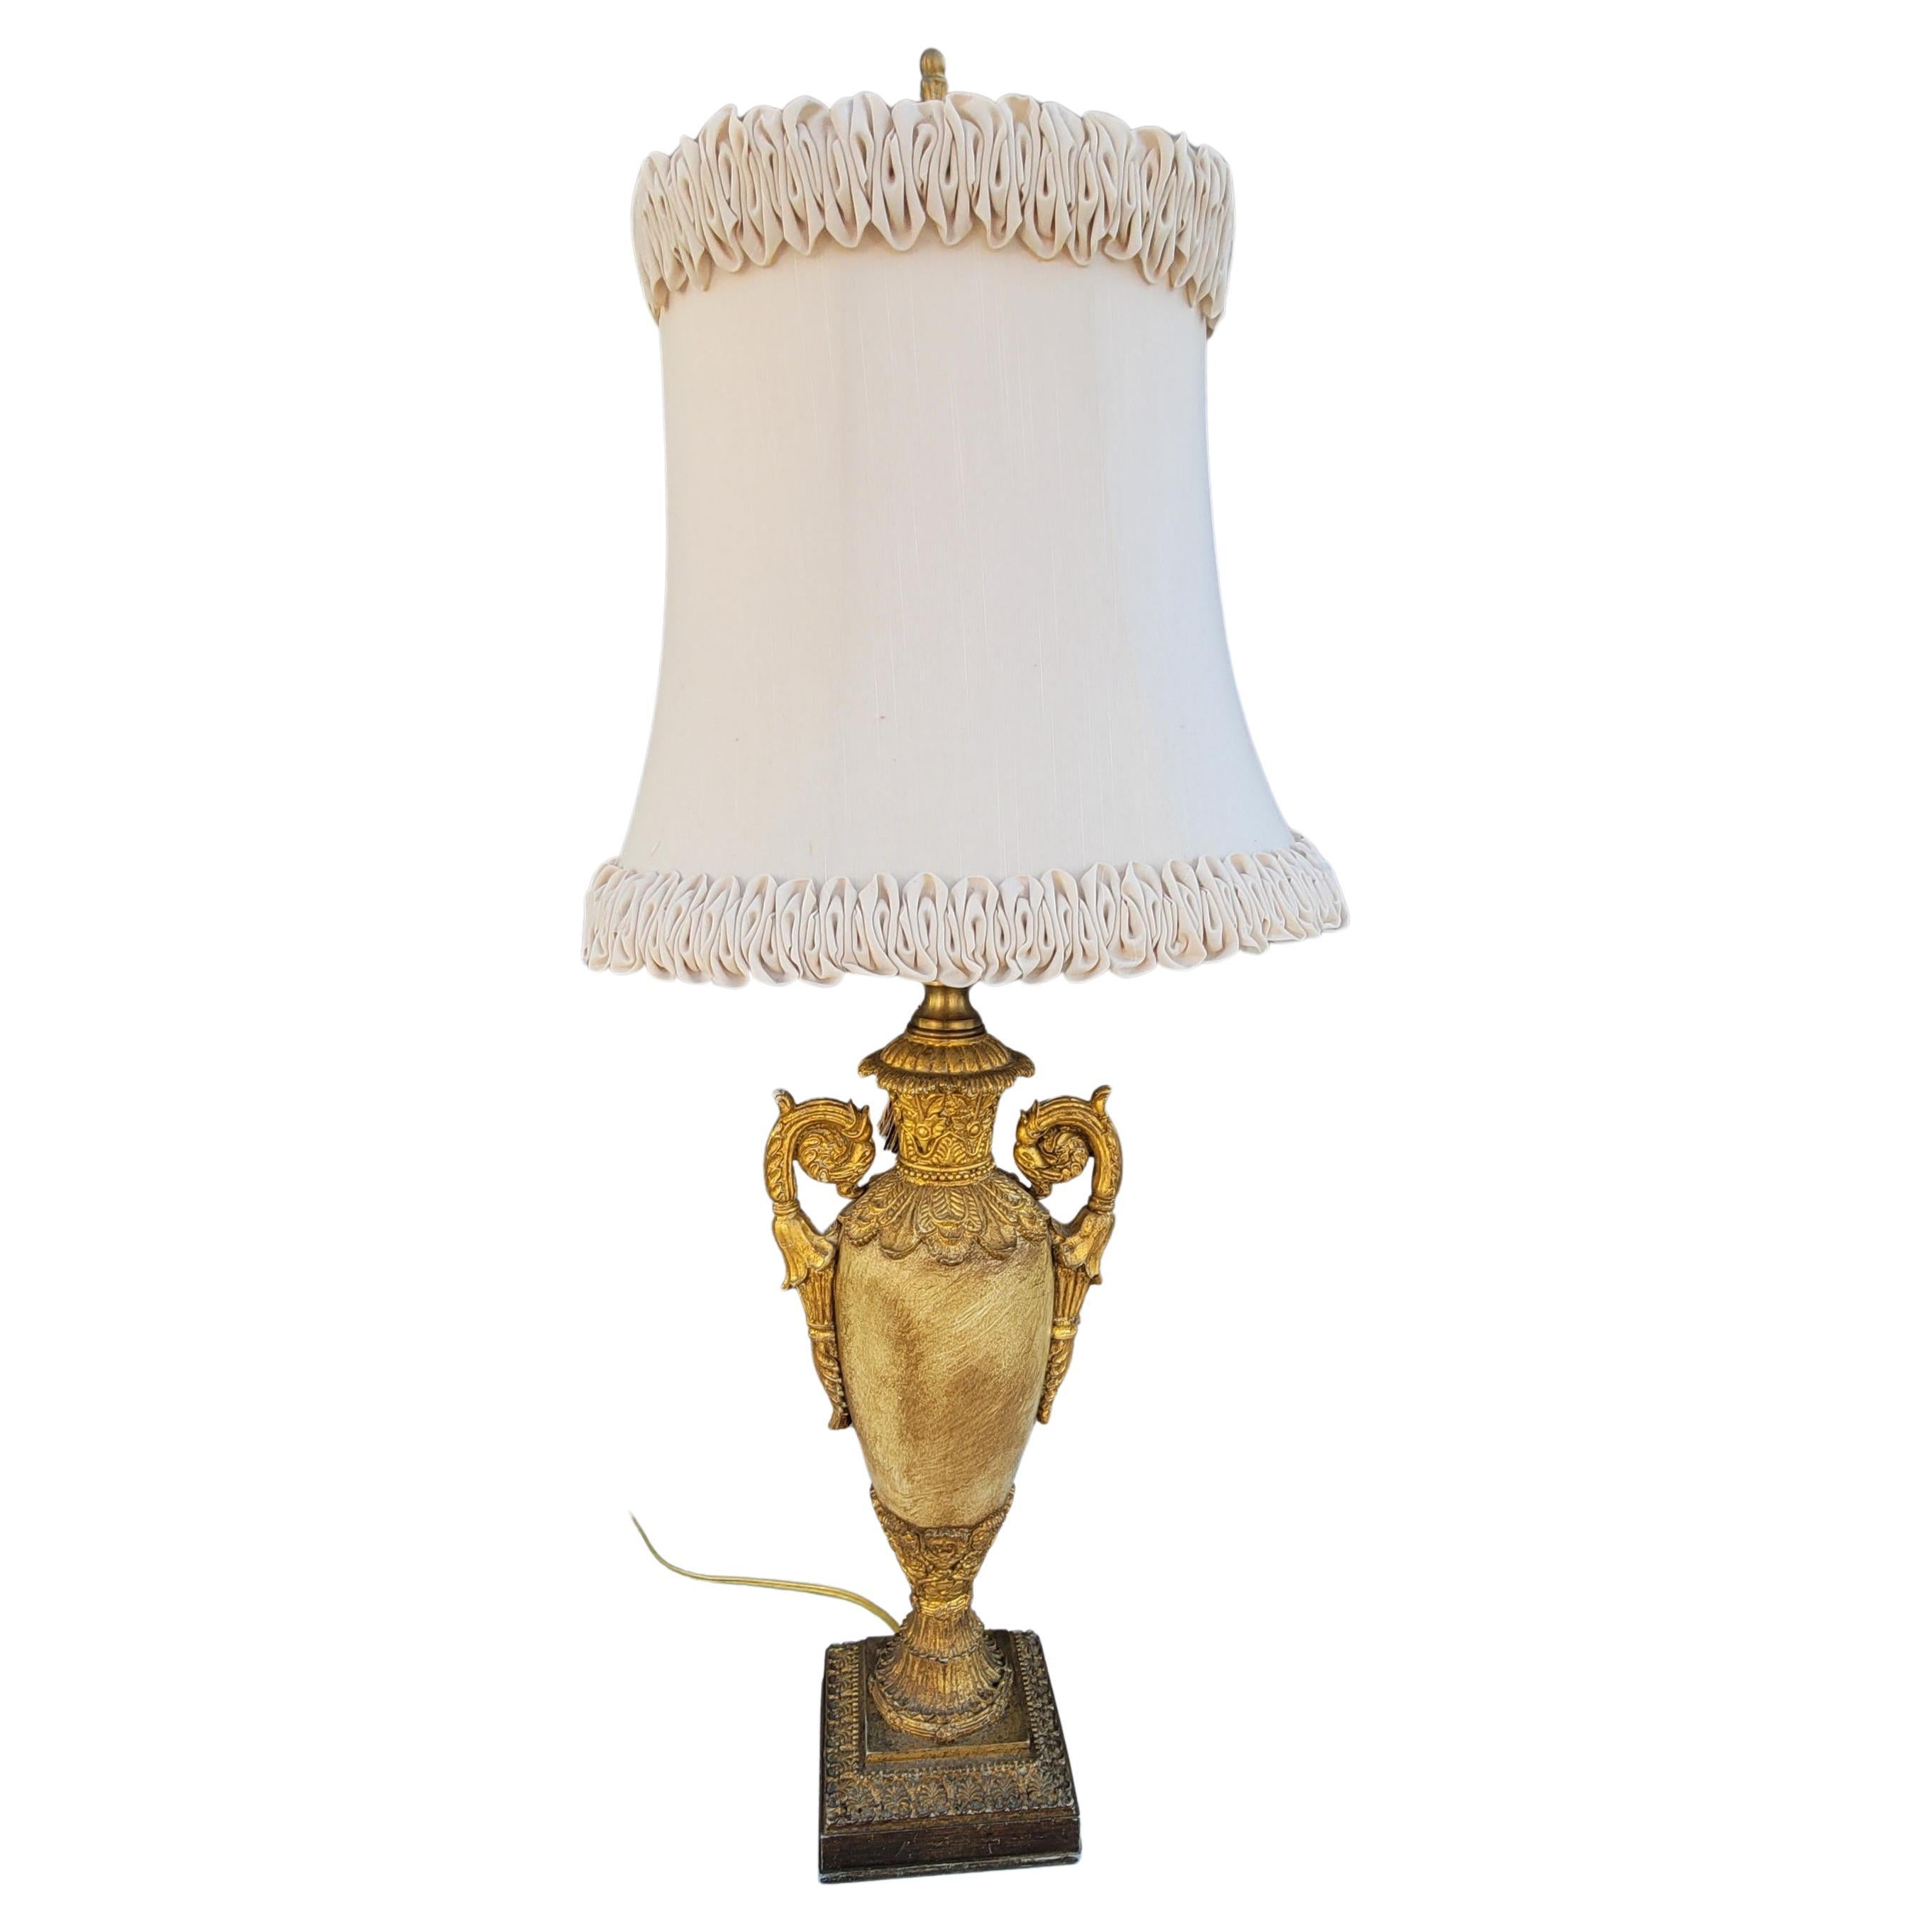 John Richard Antiqued Gilt Ornate Plaster Trophy Table Lamp w/ Original Shade For Sale